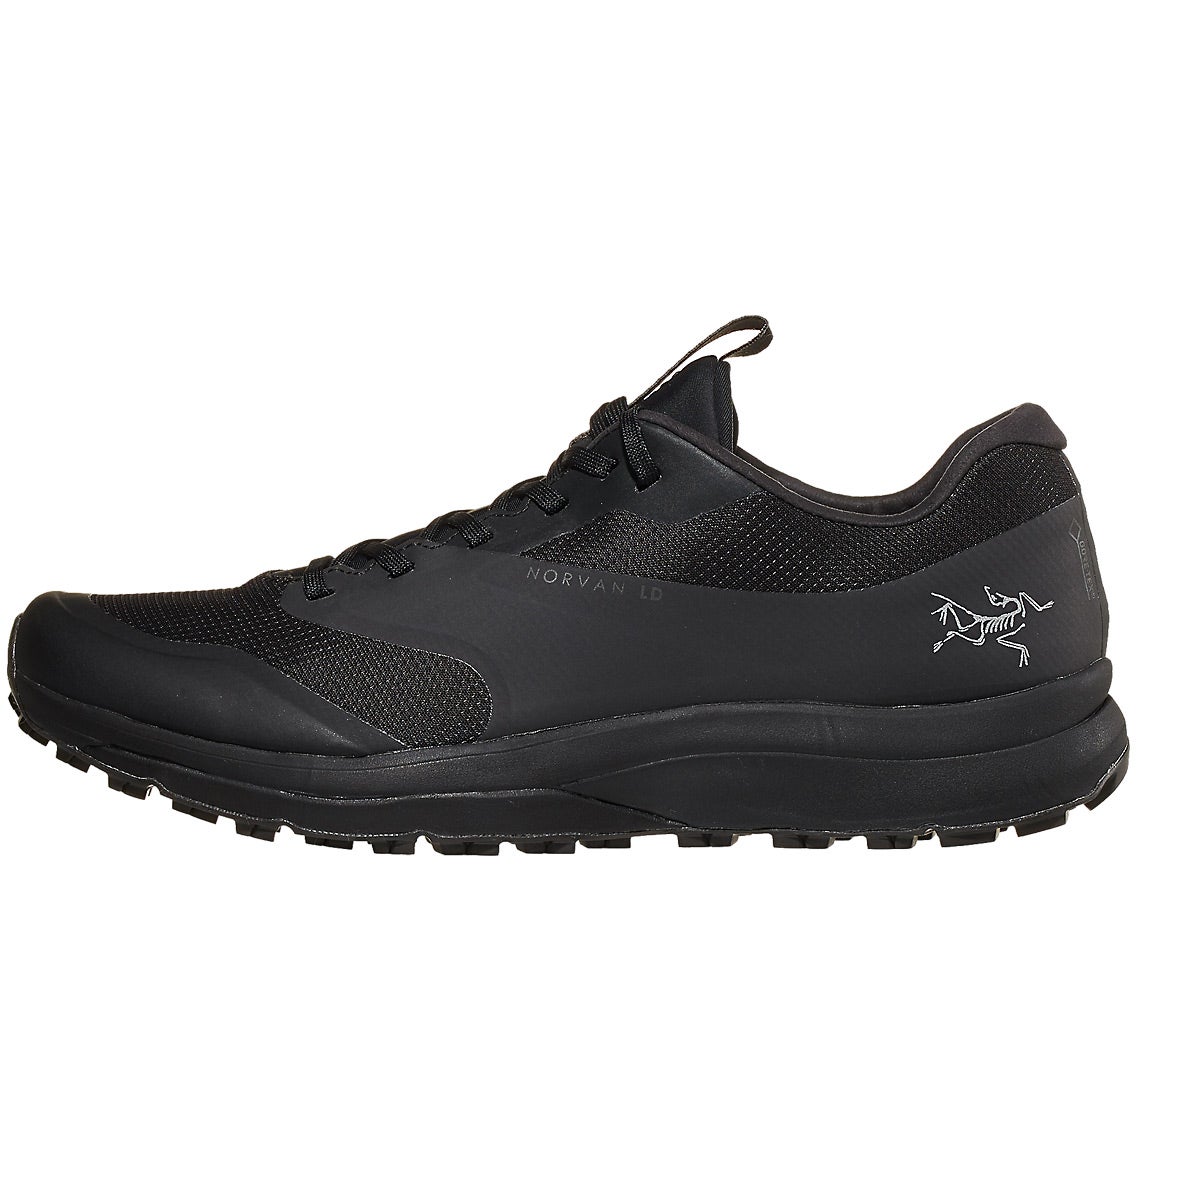 ARC'TERYX Norvan LD GTX Men's Shoes Black/Shark 360° View | Running ...